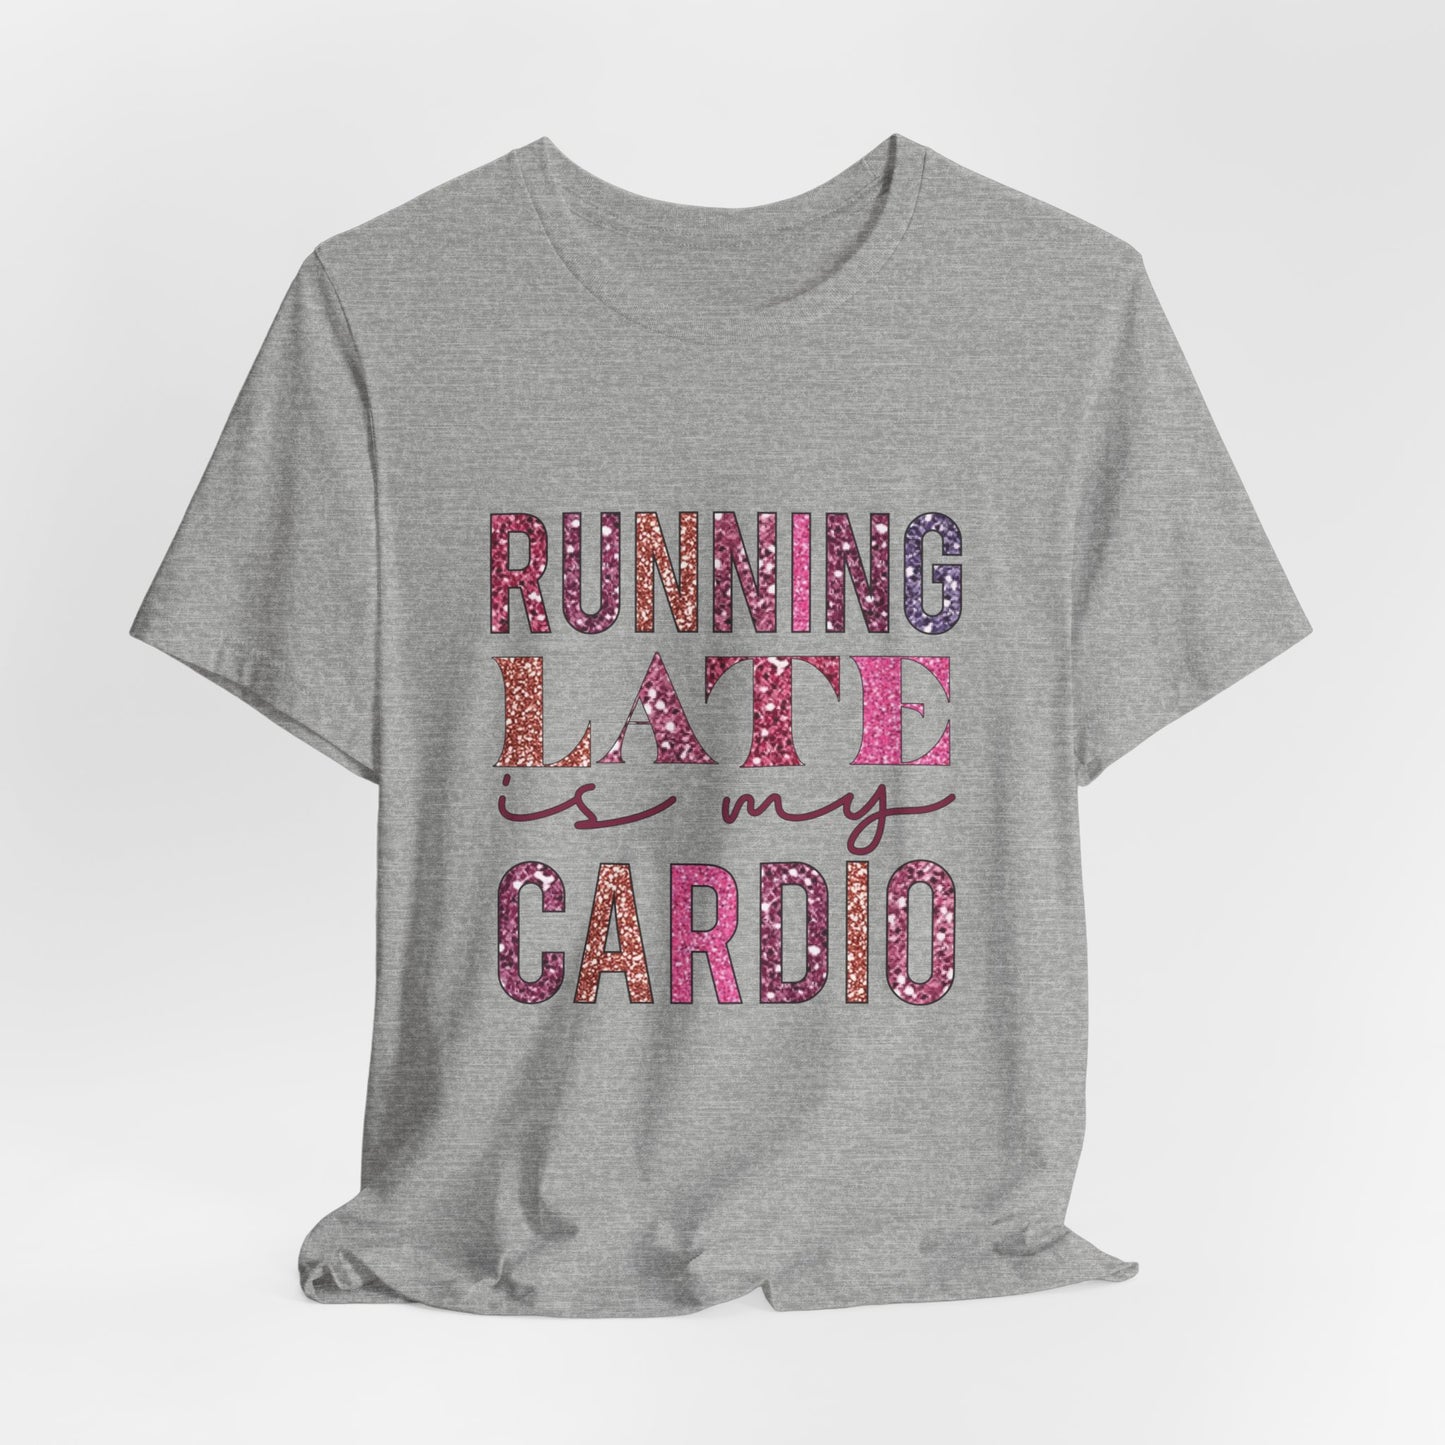 Running Late is My Cardio Women's Funny Short Sleeve Tshirt